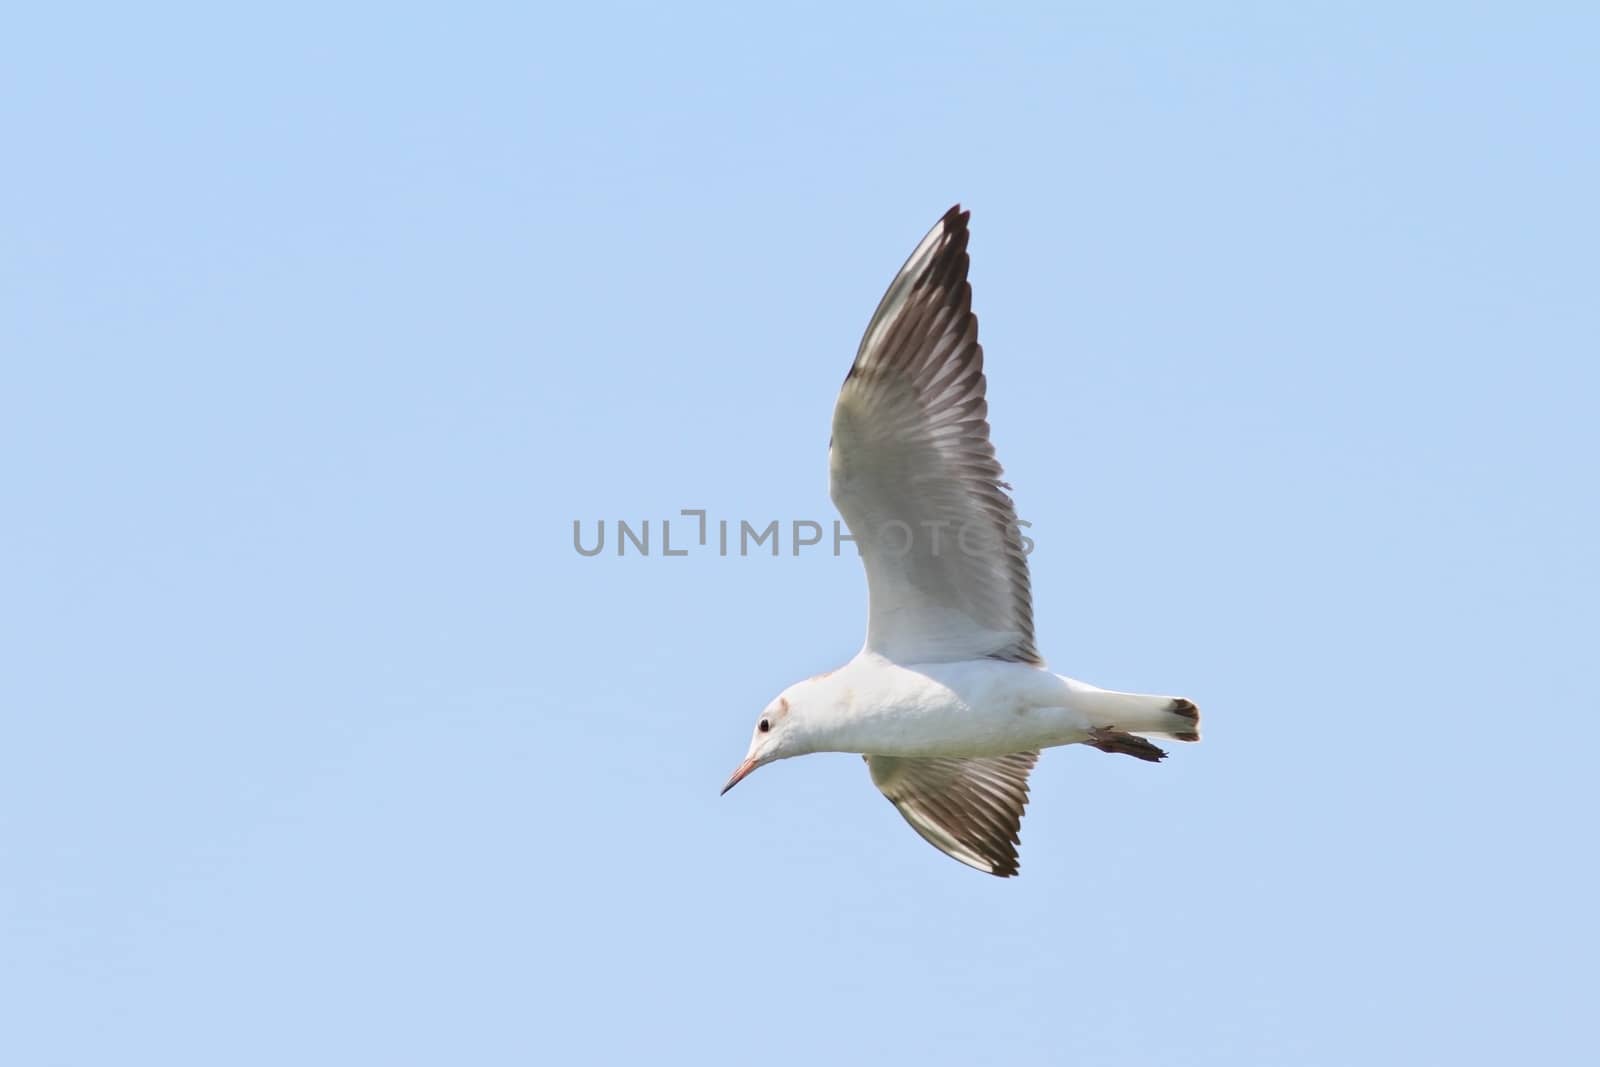 big beautiful gull in flight over blue sky background